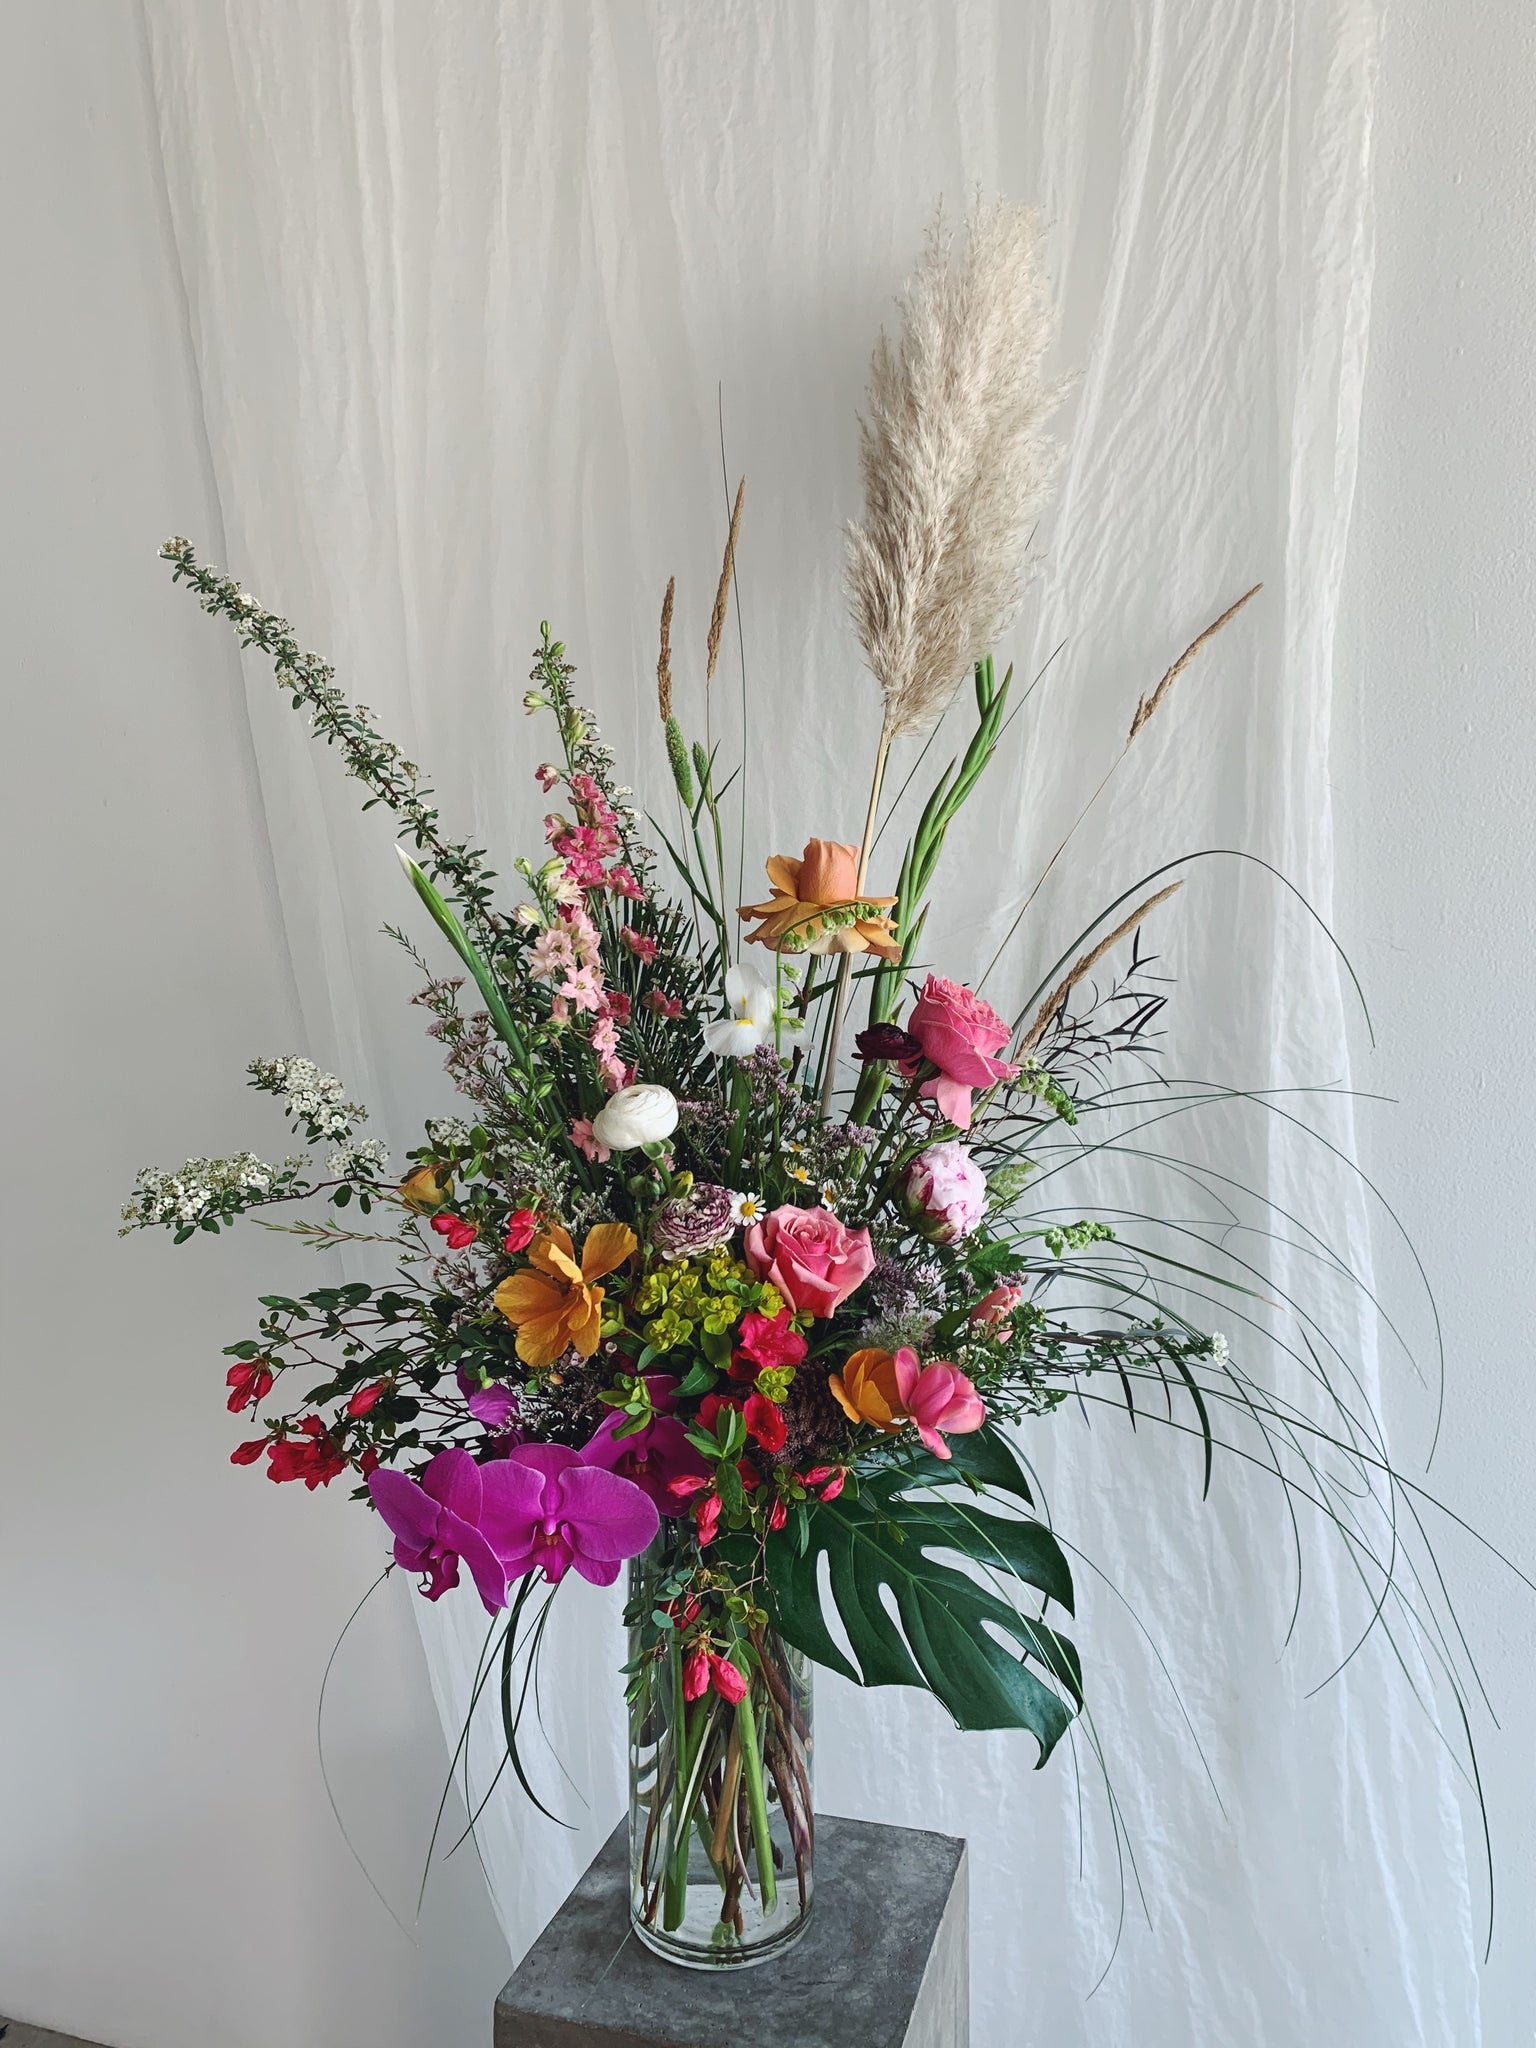 Flower Delivery Vancouver-The Mother's Day Focal Arrangement-Arrangements-Florist-The Wild Bunch Flower Shop